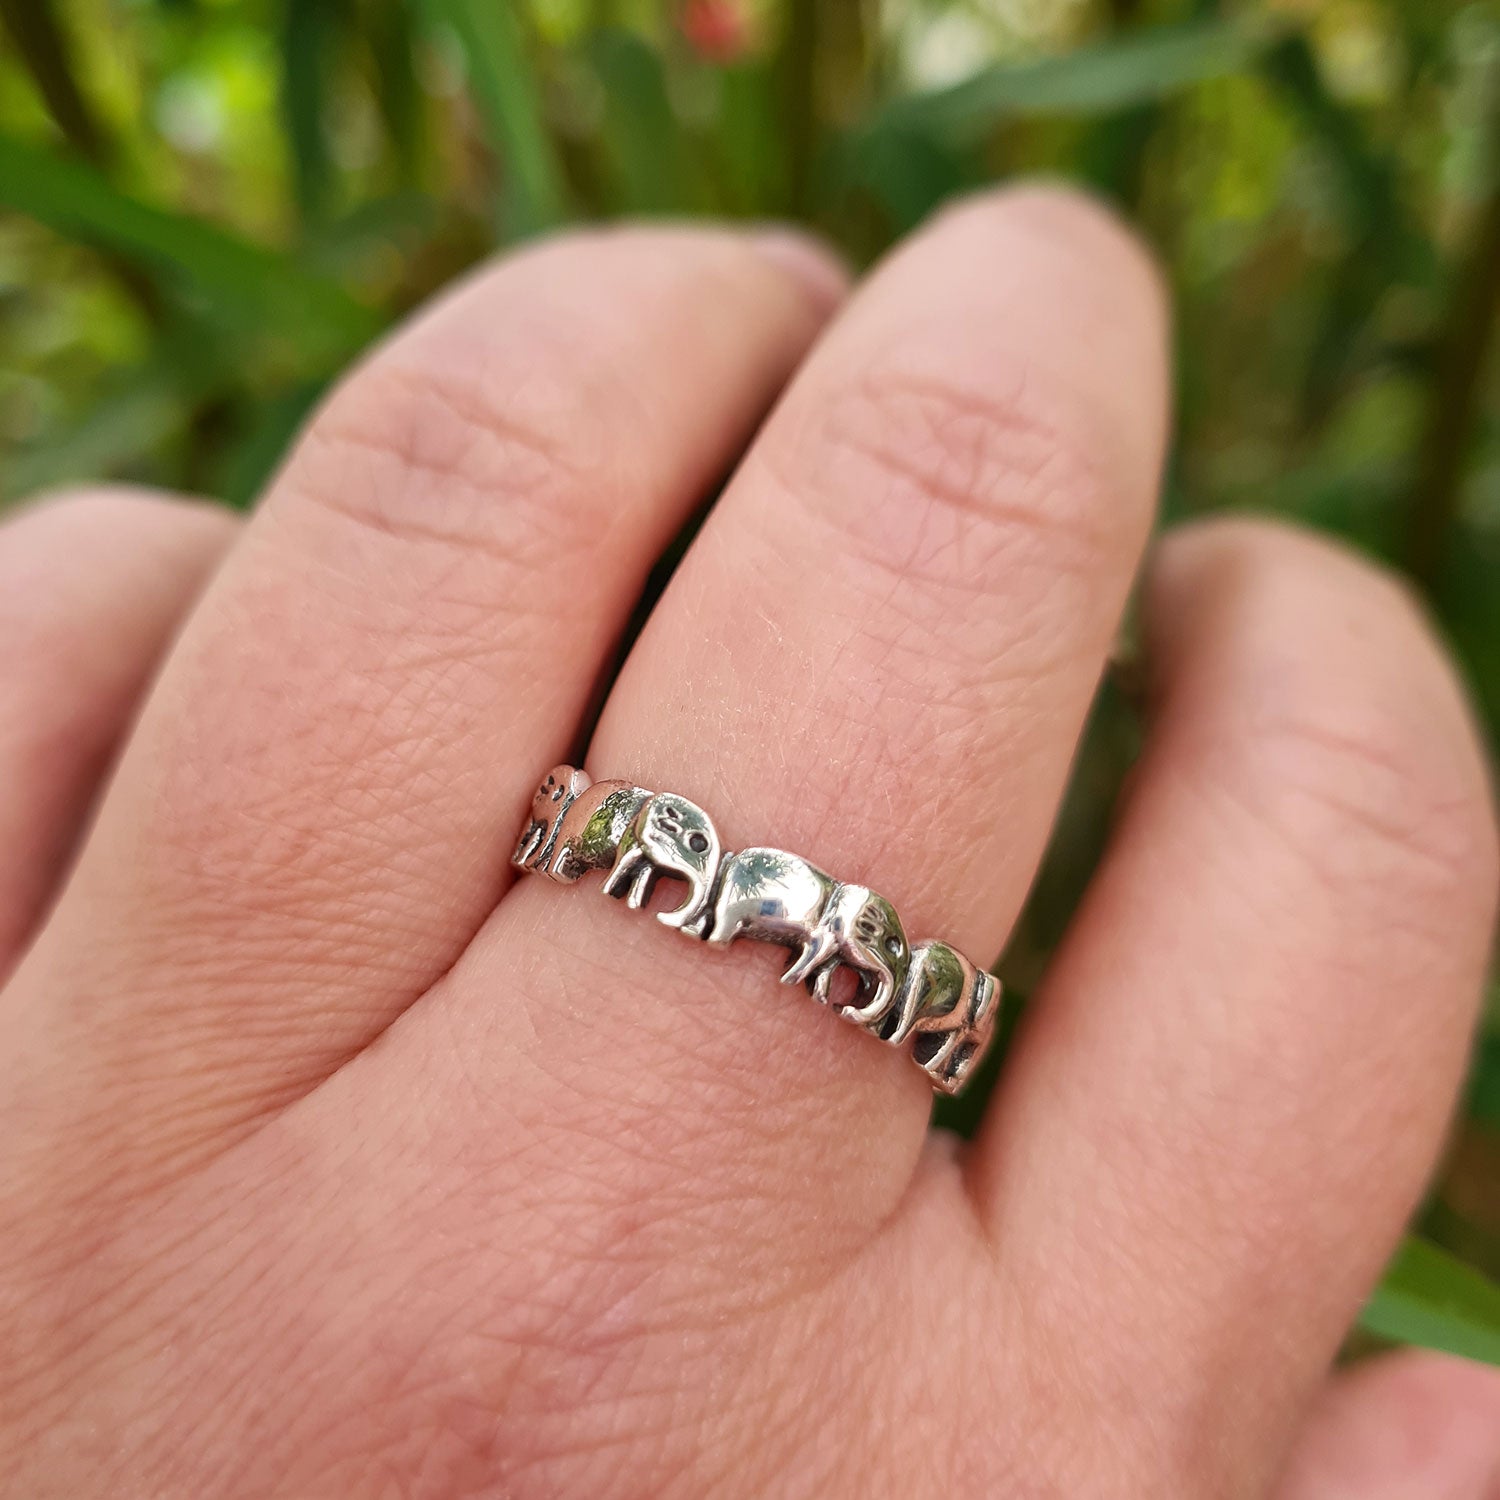 Elephant Ring Female Metal Animal Index Finger Ring | eBay